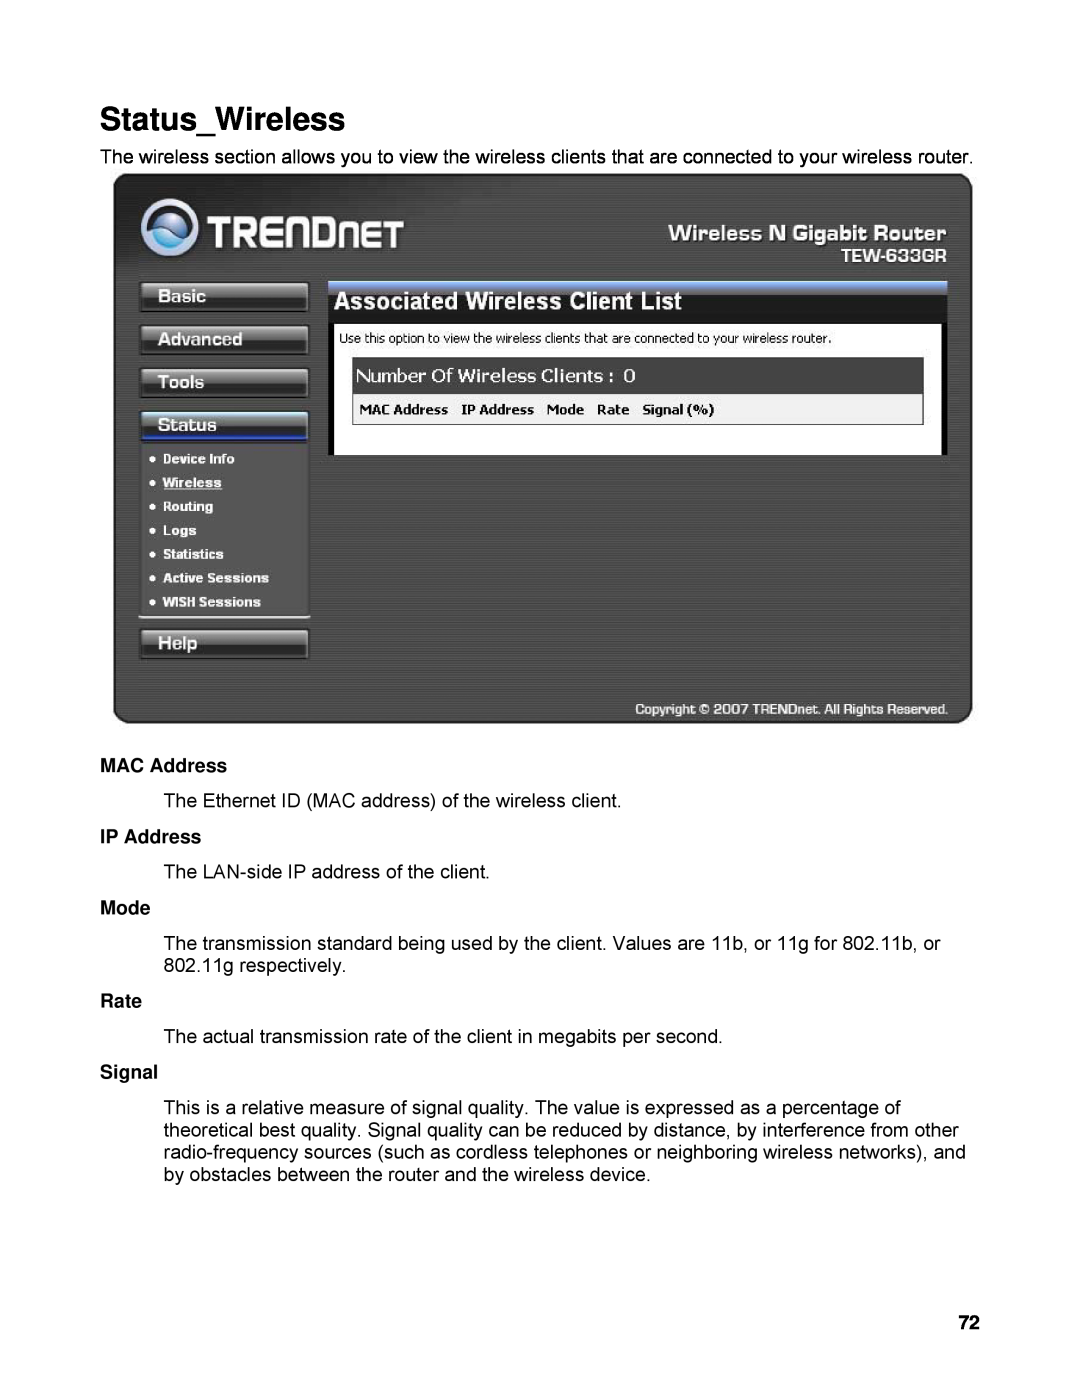 TRENDnet TEW-633GR manual StatusWireless, MAC Address, IP Address, Mode, Rate, Signal 